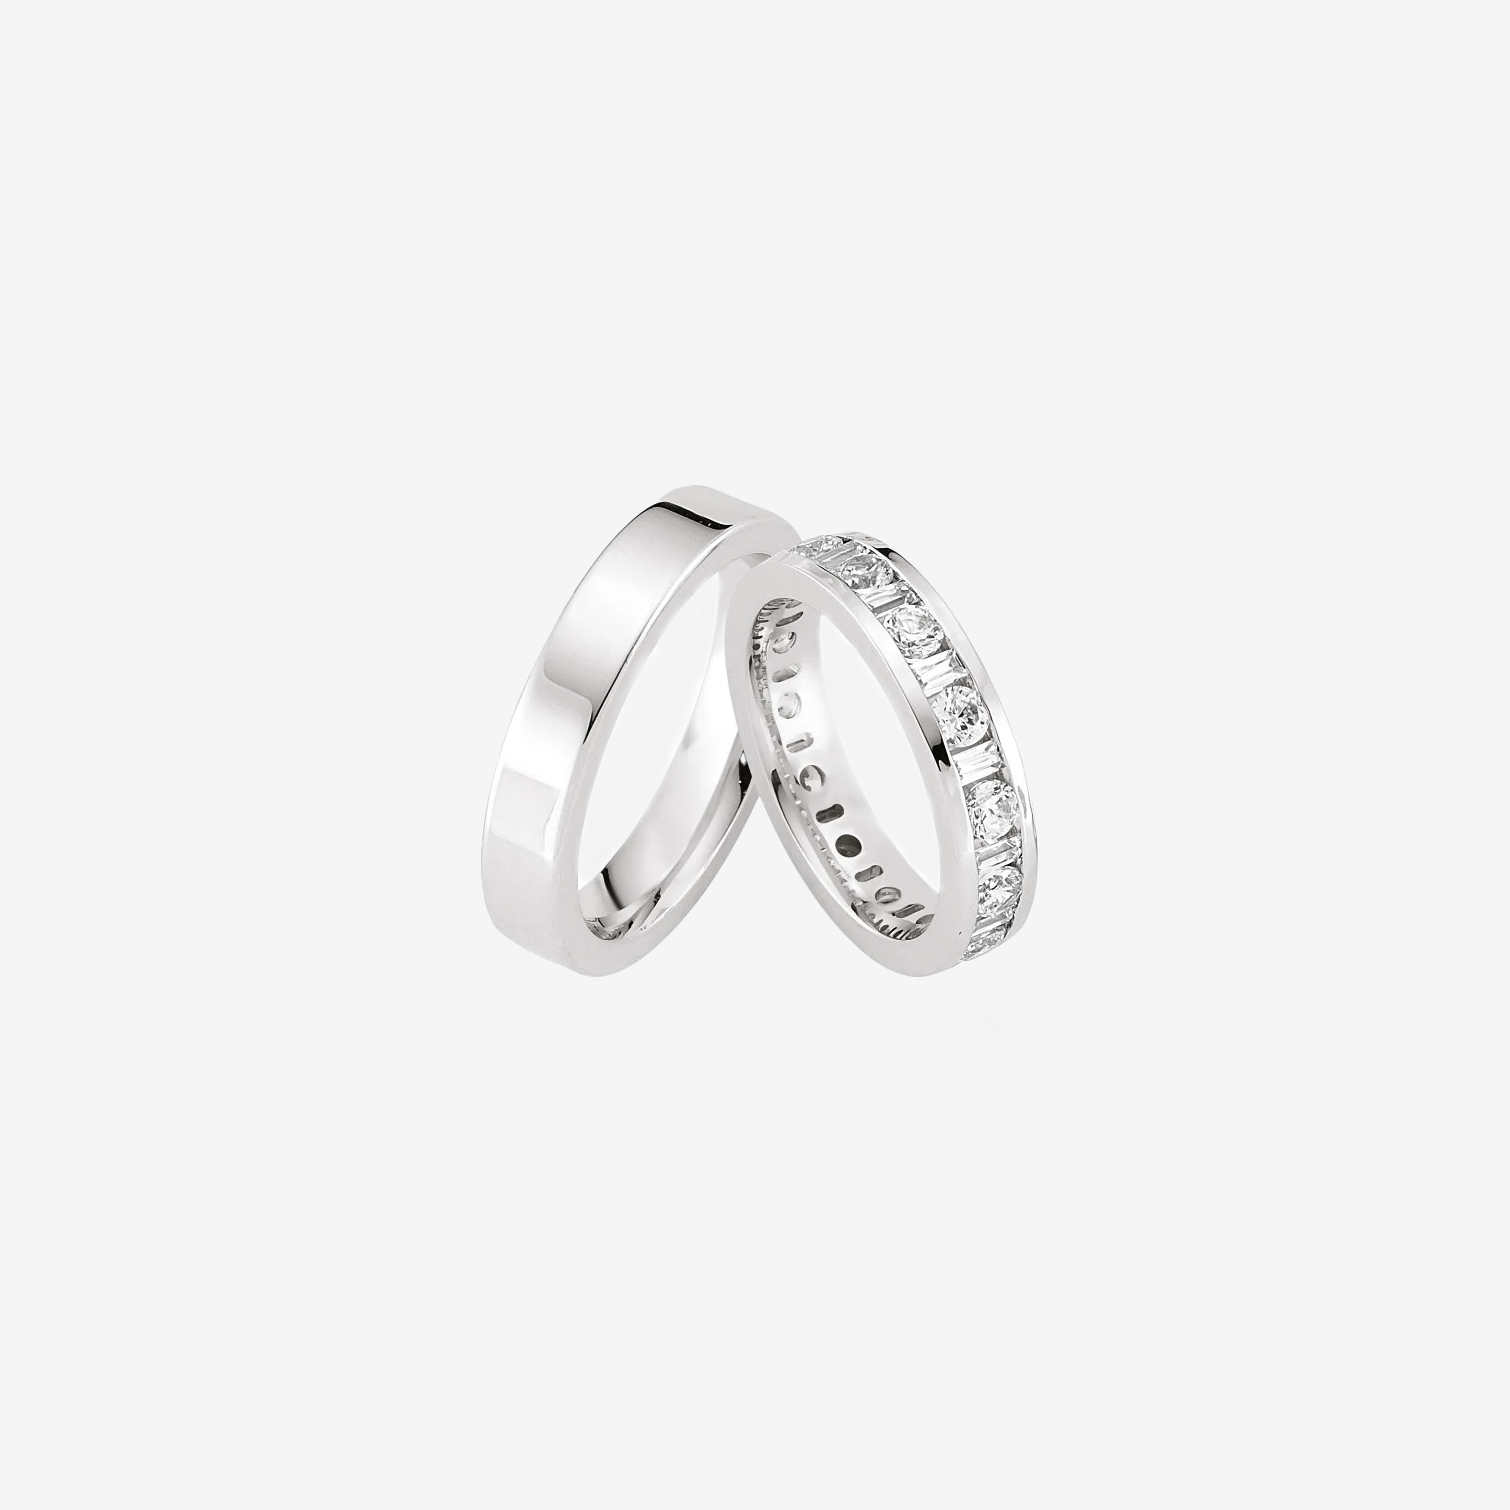 Ava Diamond Wedding Rings - White Gold - Pair